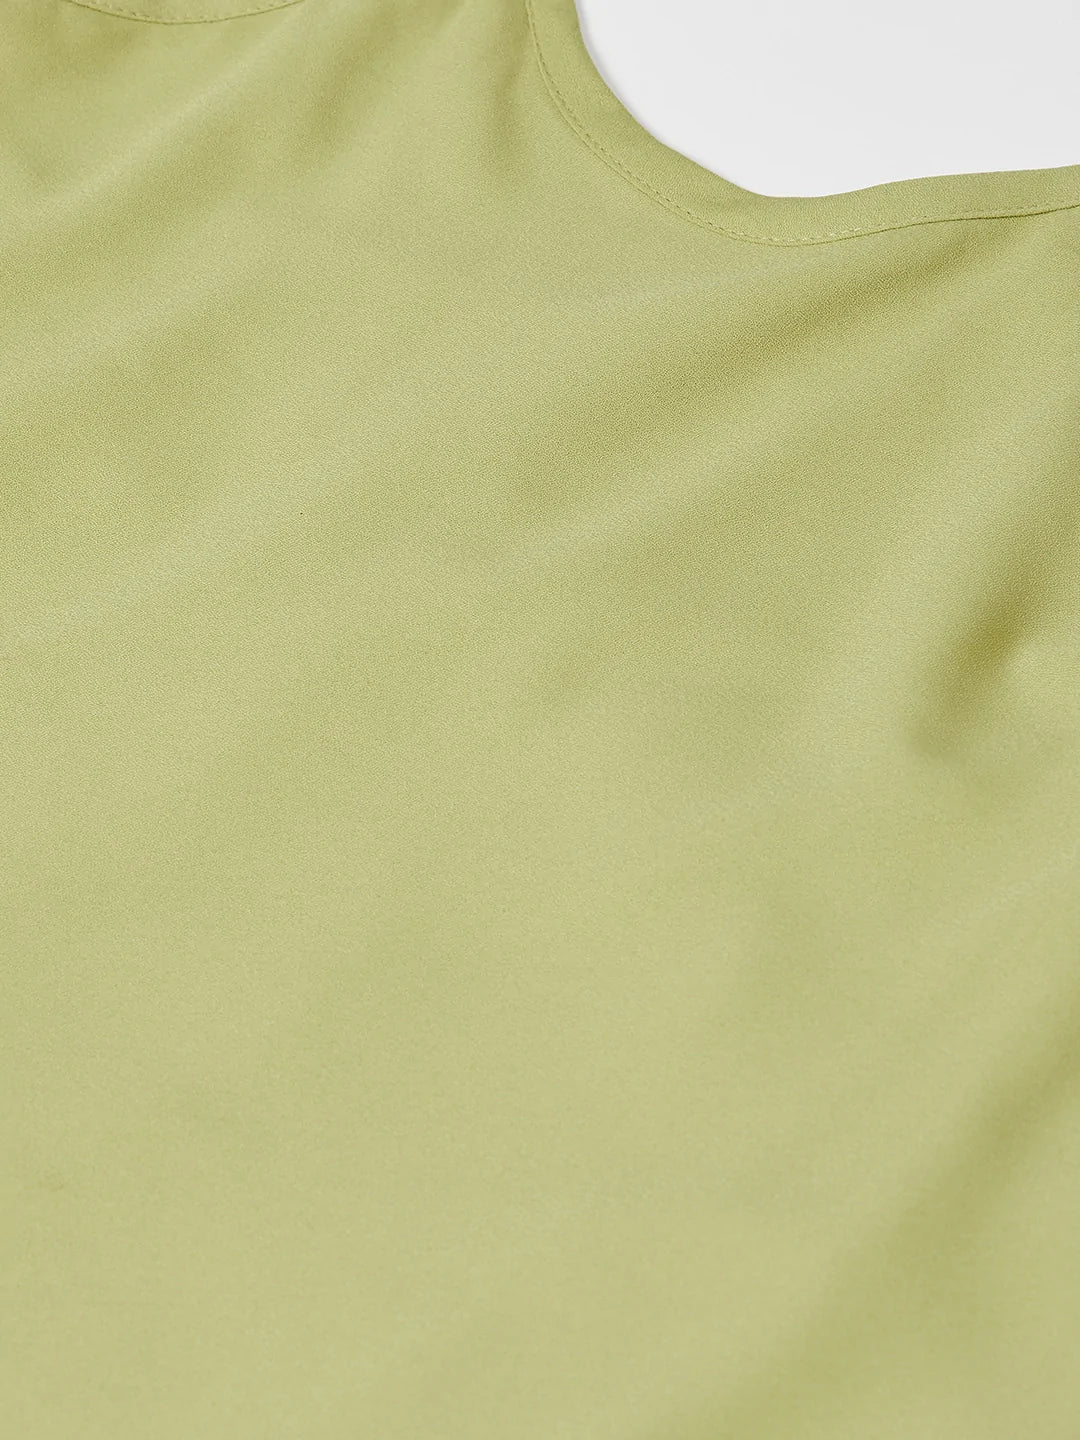 Jompers Women Green-Coloured Solid Halter Neck Basic Jumpsuit ( JUP 8010 Green )